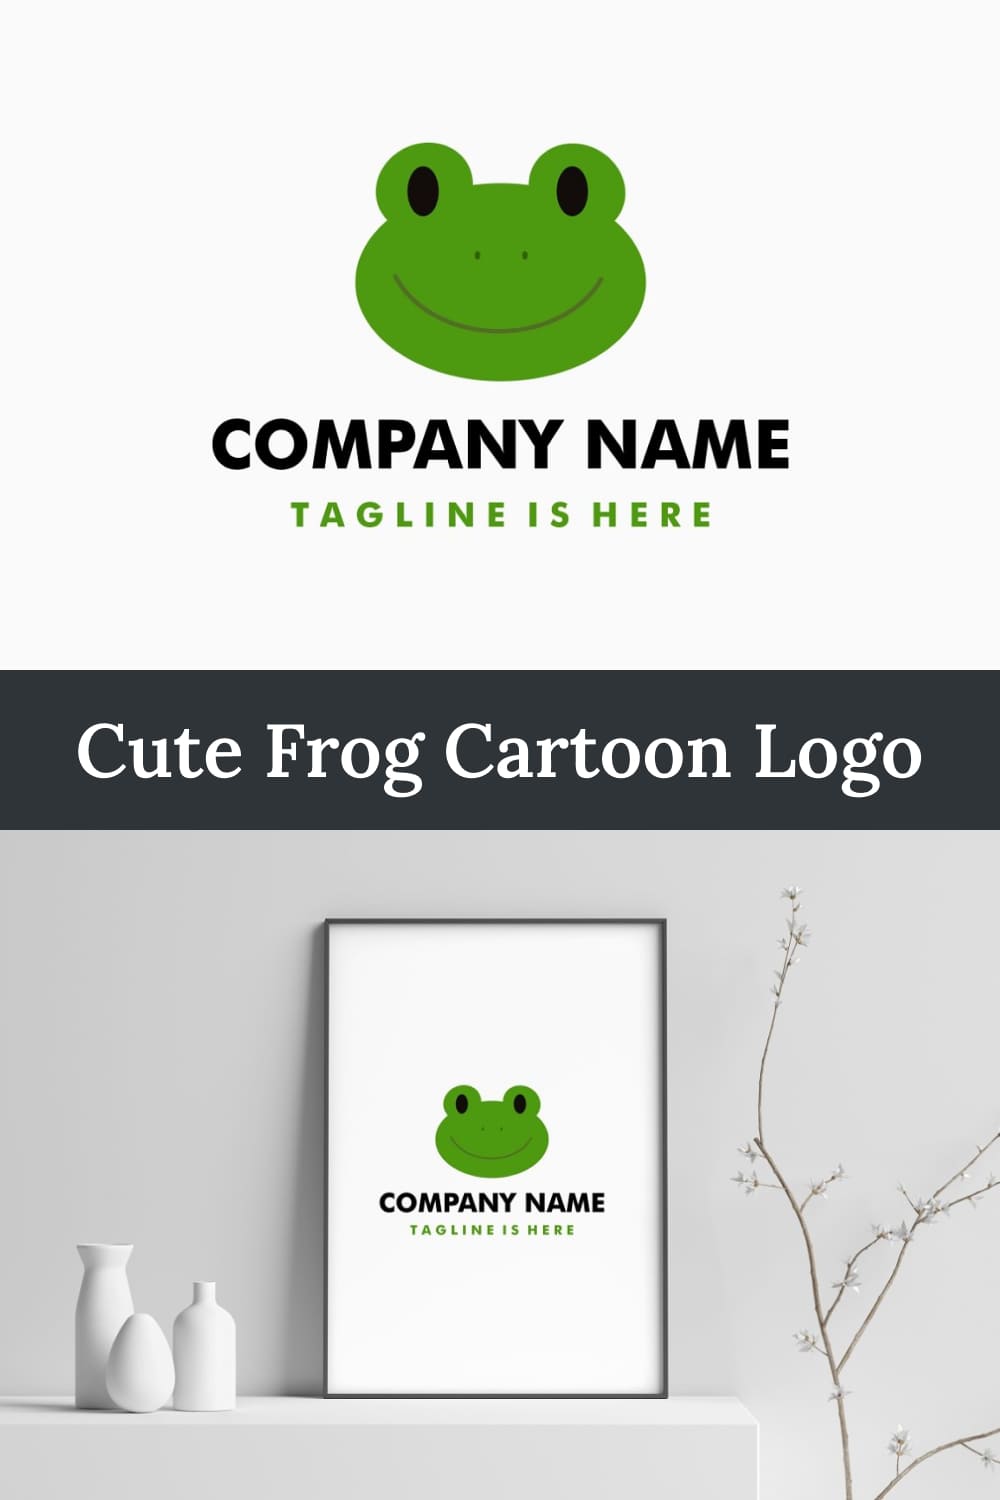 Cute frog cartoon logo - pinterest image preview.